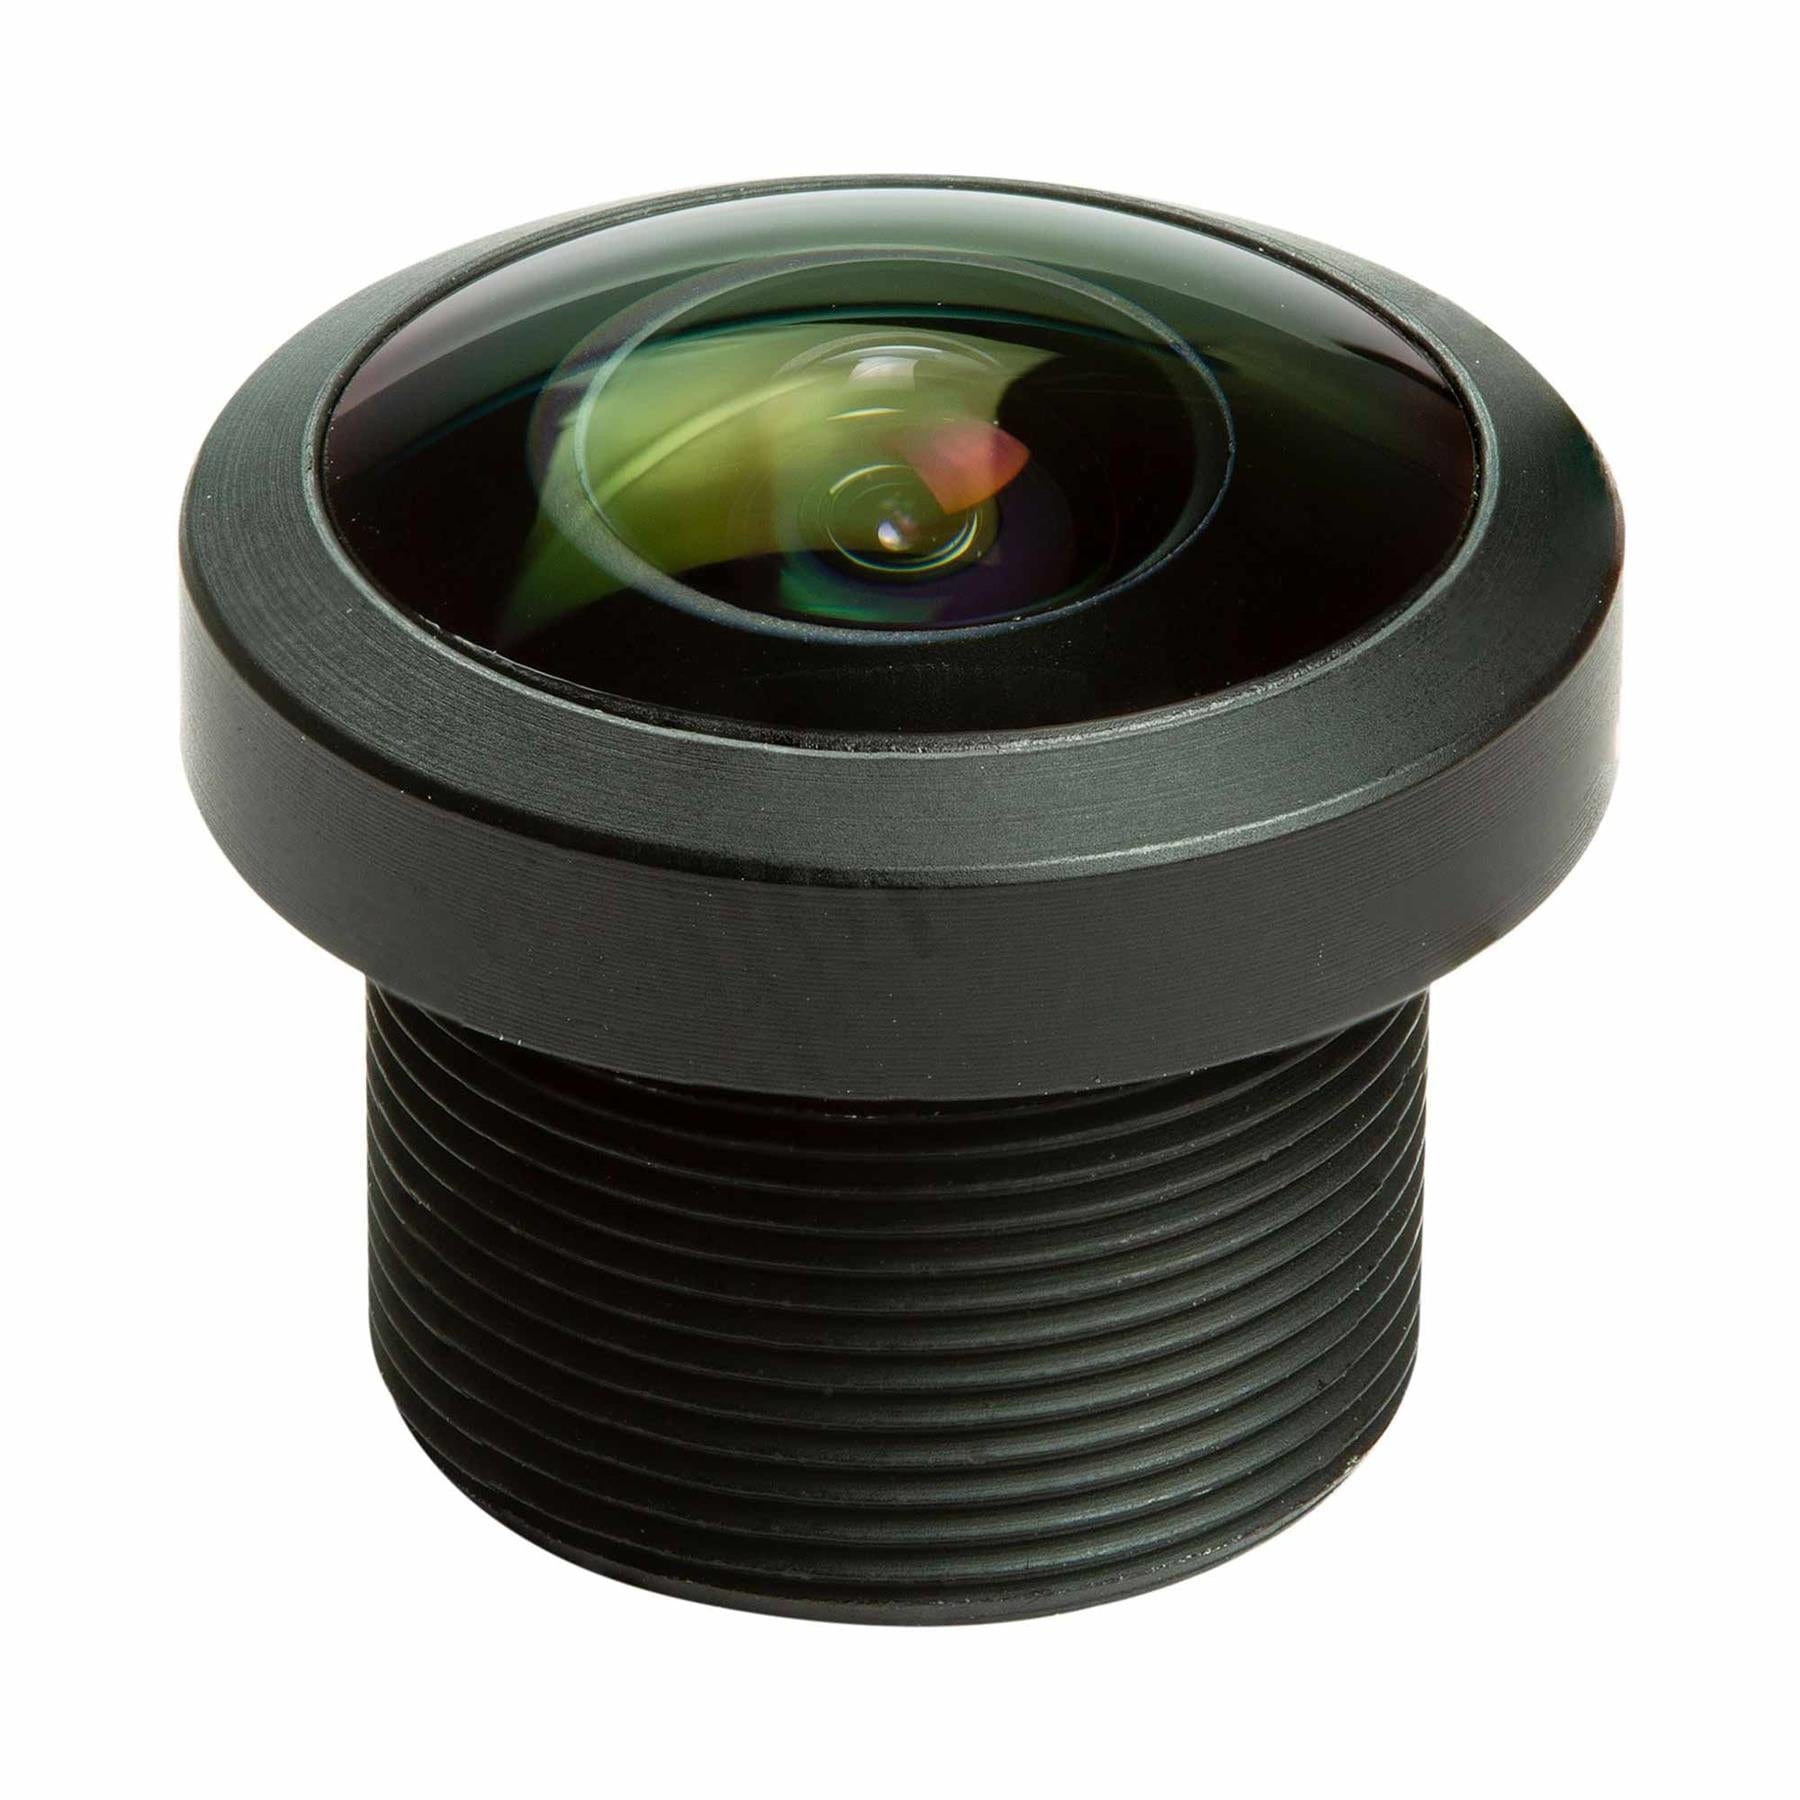 M12 Lens - 222-Degree (1/3.2" Optical Format, 0.76mm Focal Length) - The Pi Hut